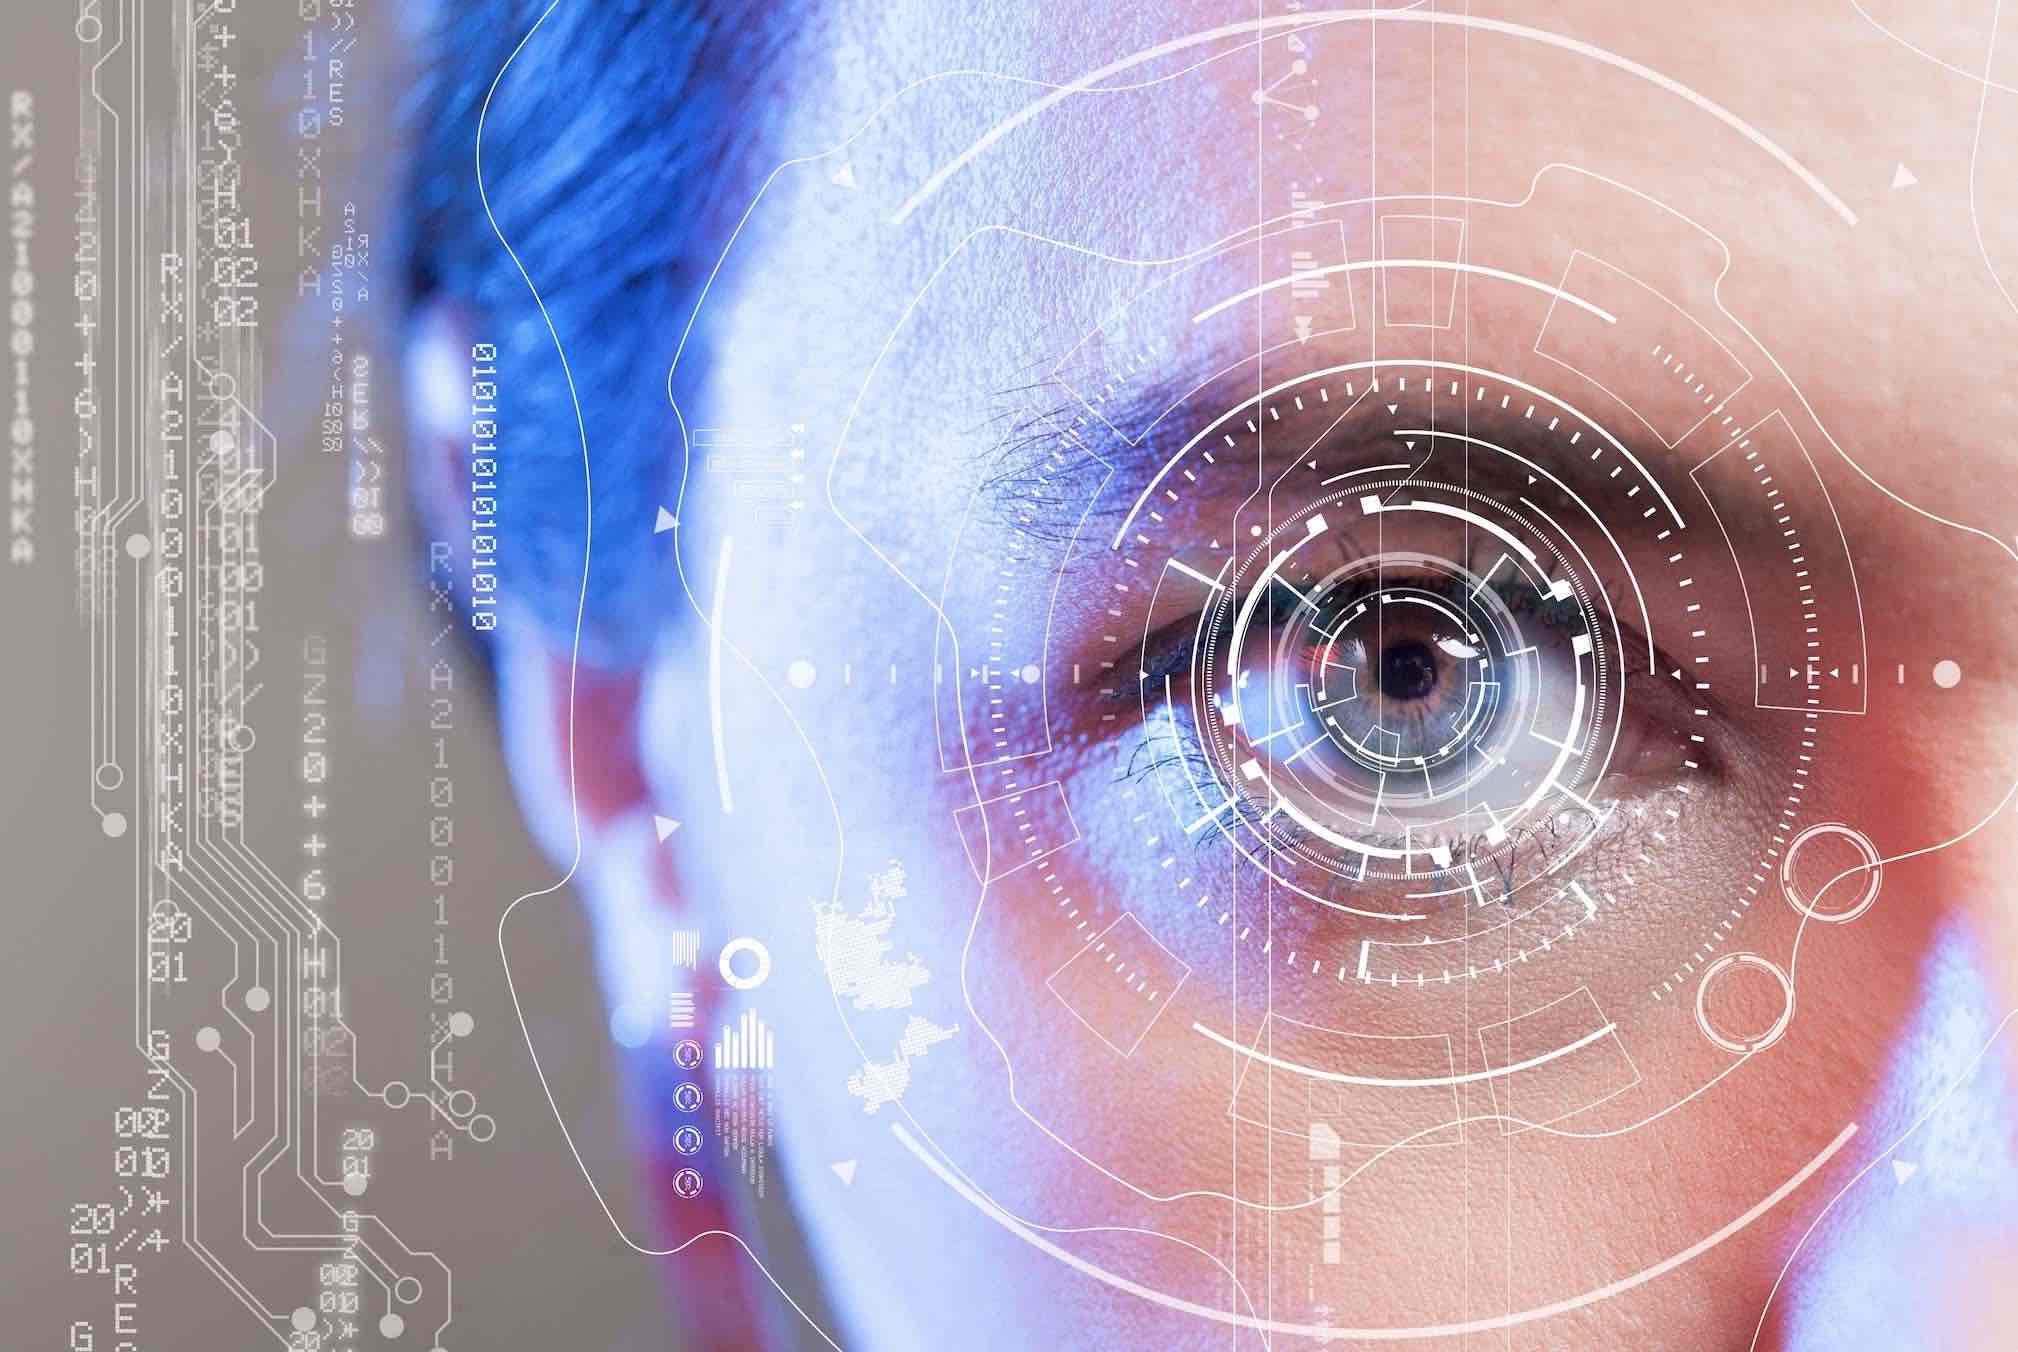 Mediwhale raises $9M for AI Retina Scanning